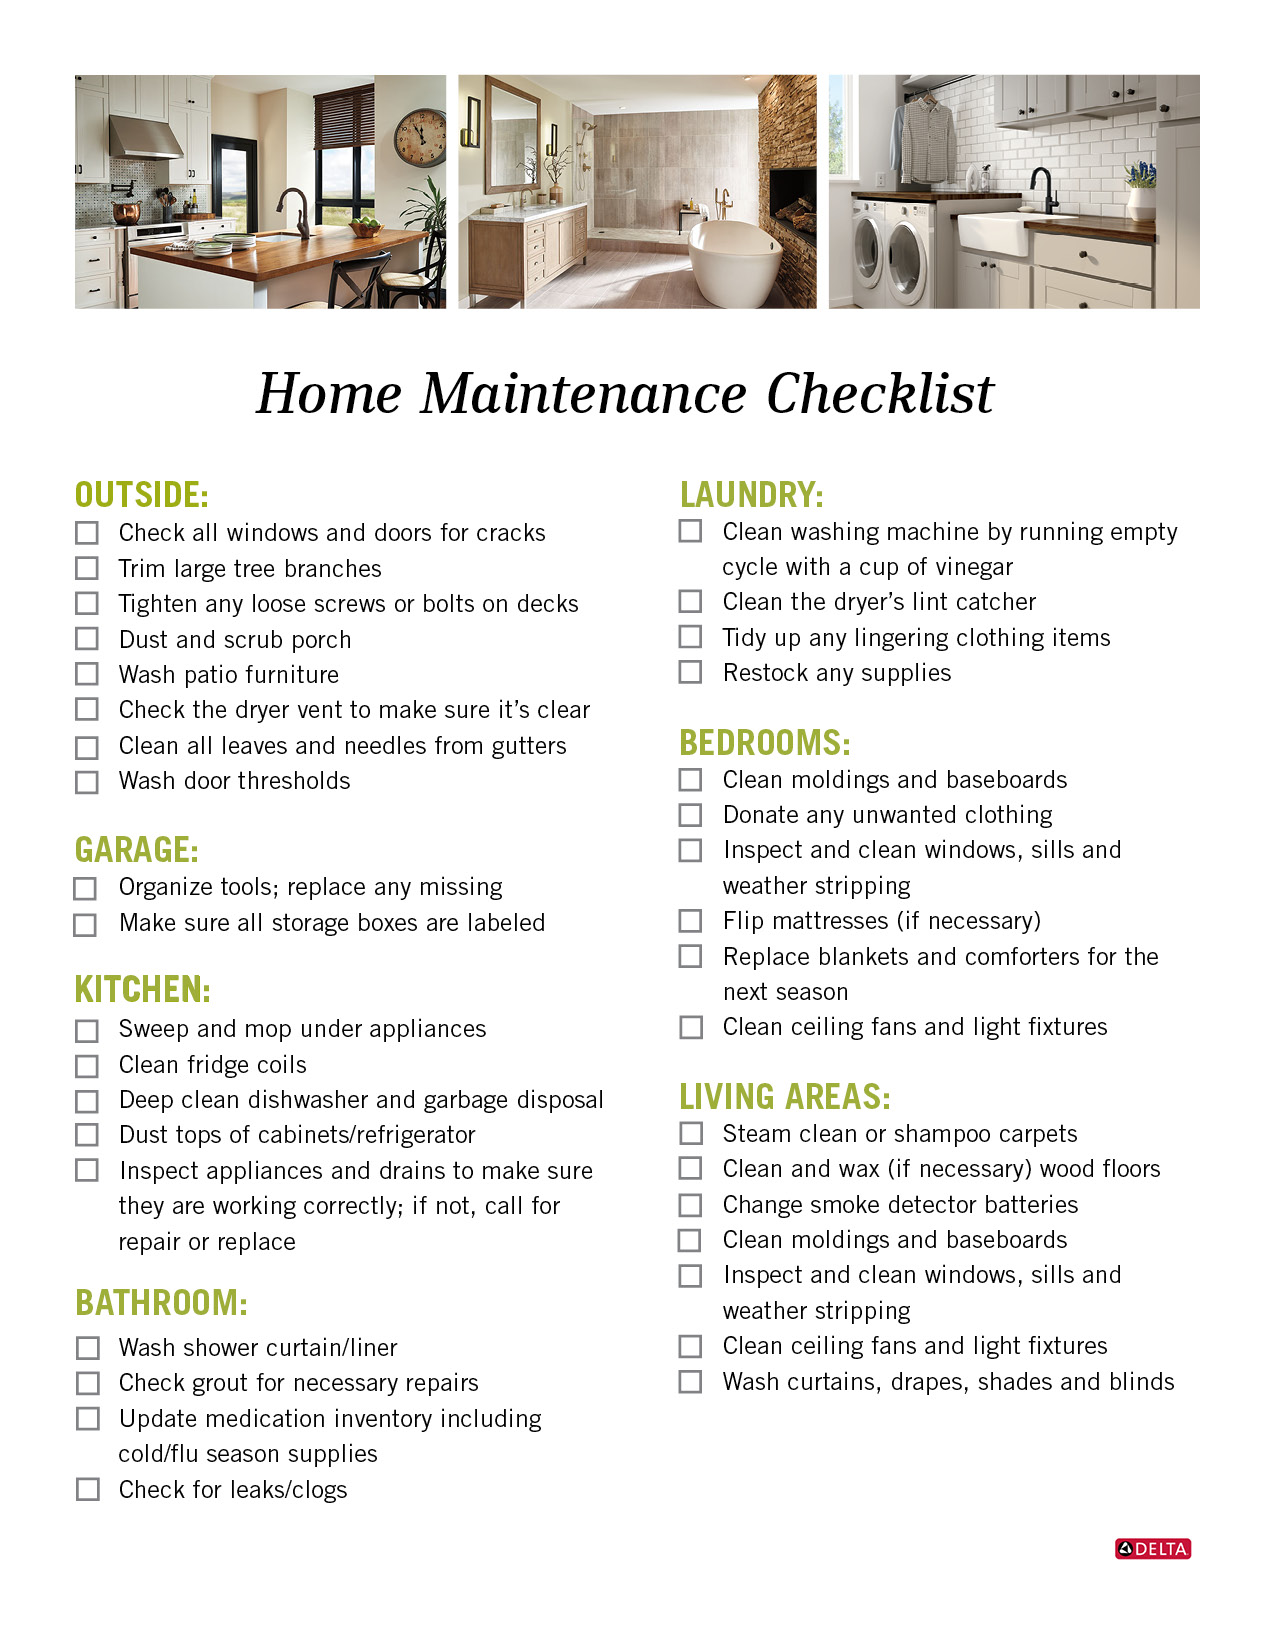 Home maintenance checklist - thingpoliz